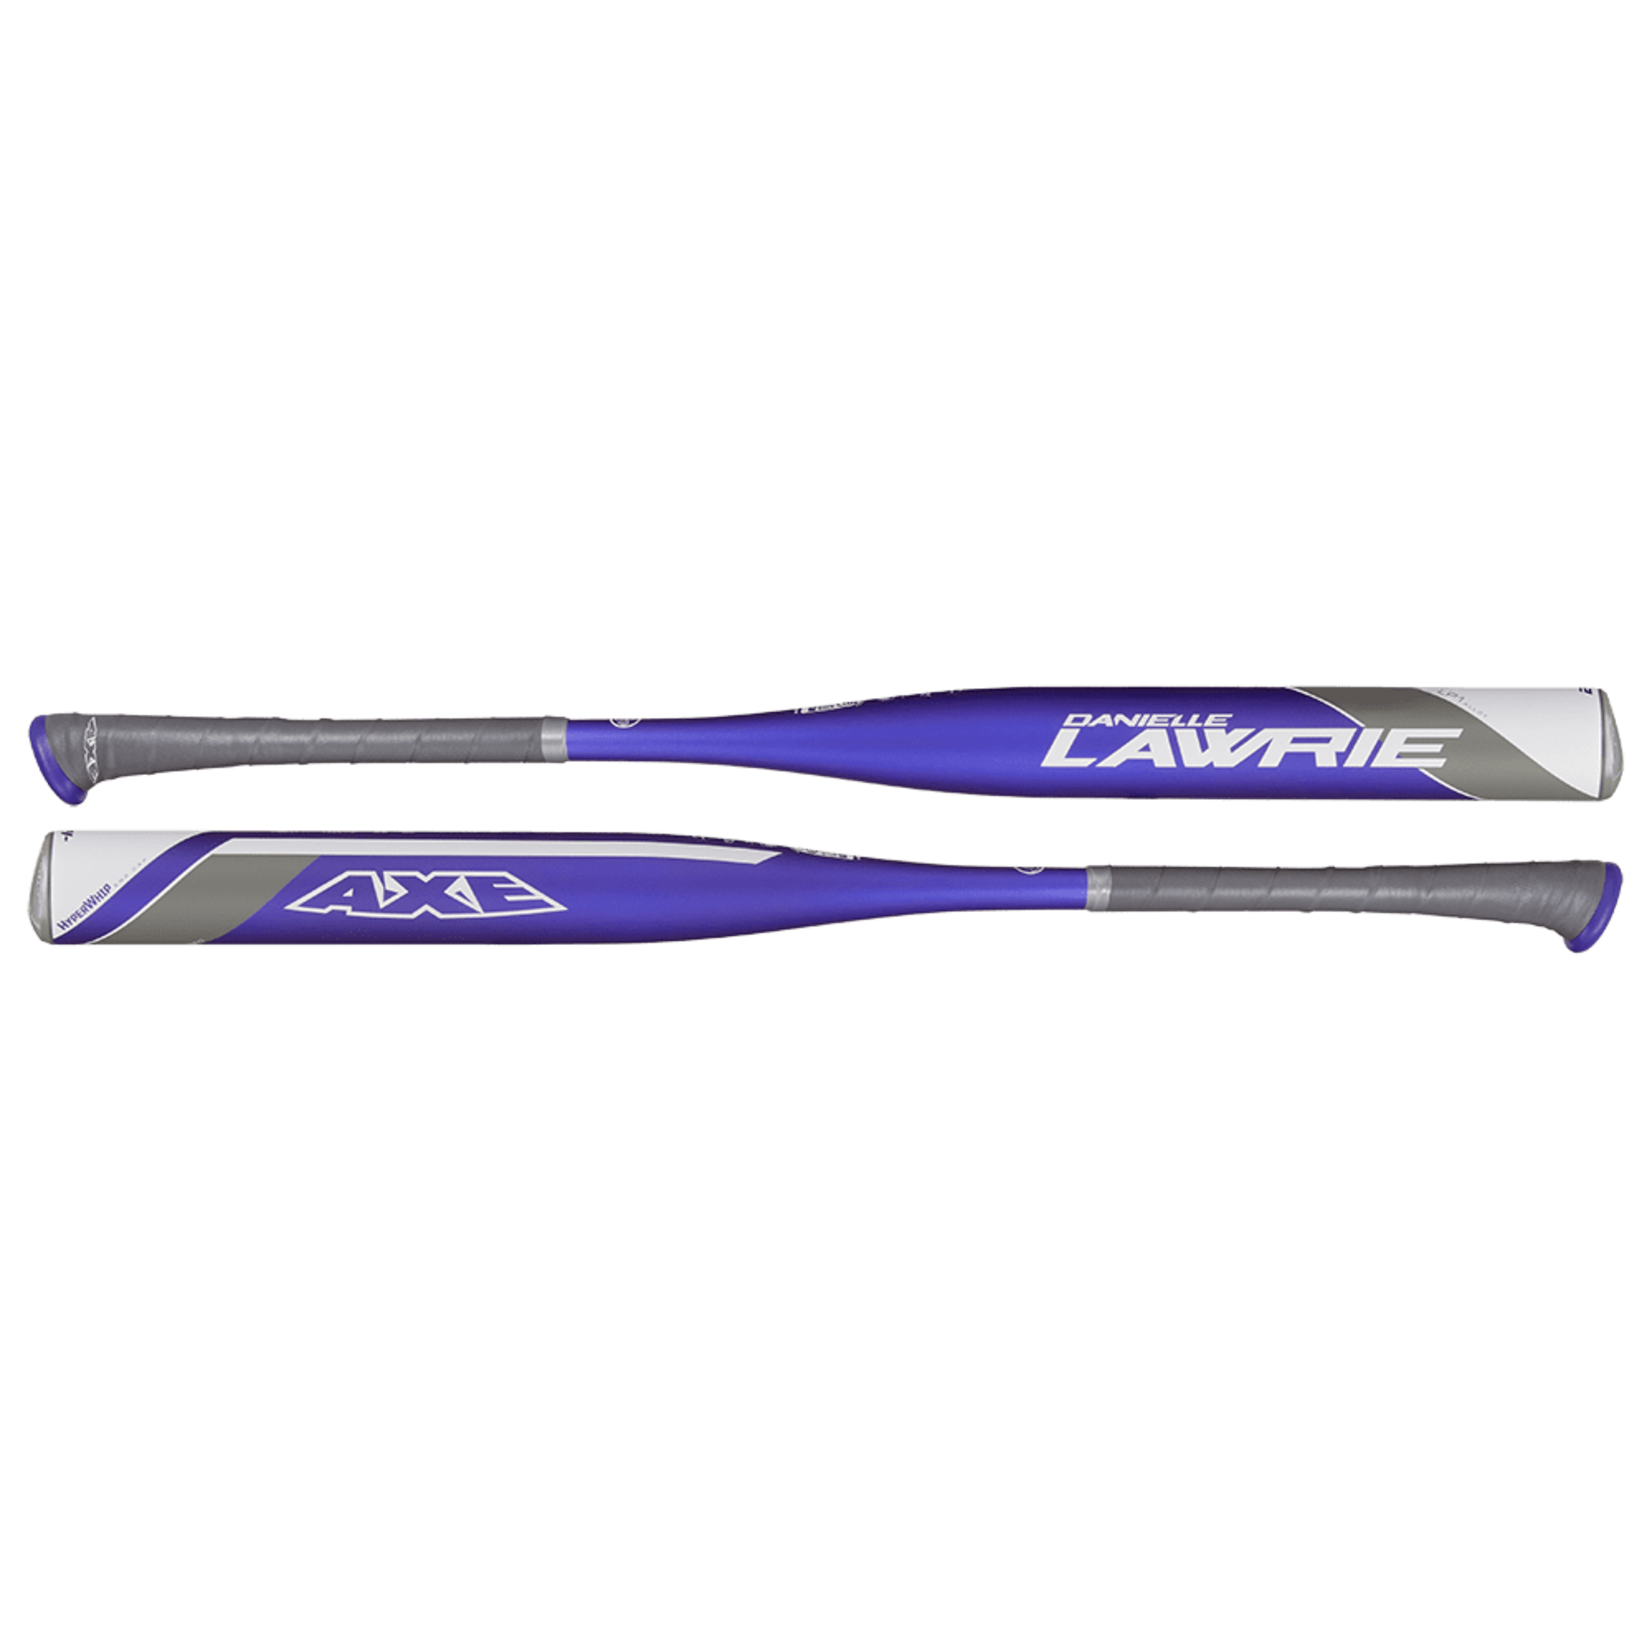 Axe Baseball Bat, Danielle Lawrie, -12, 2 1/4”